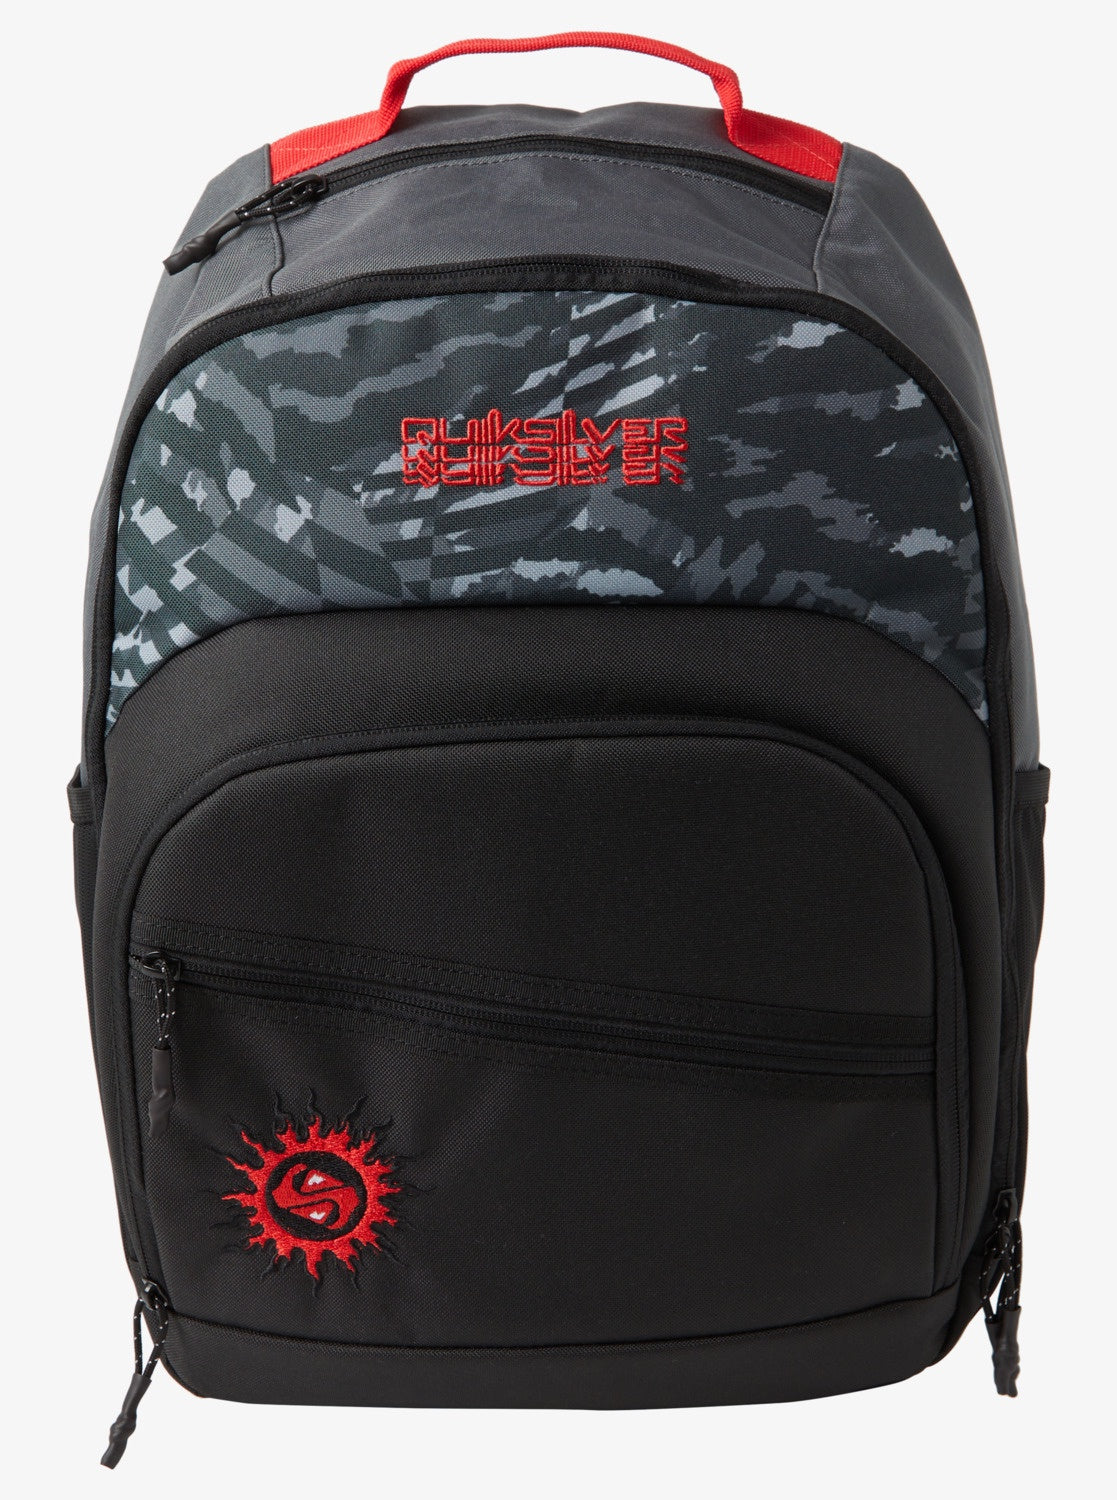 Fetchy 43L - Large Travel Backpack